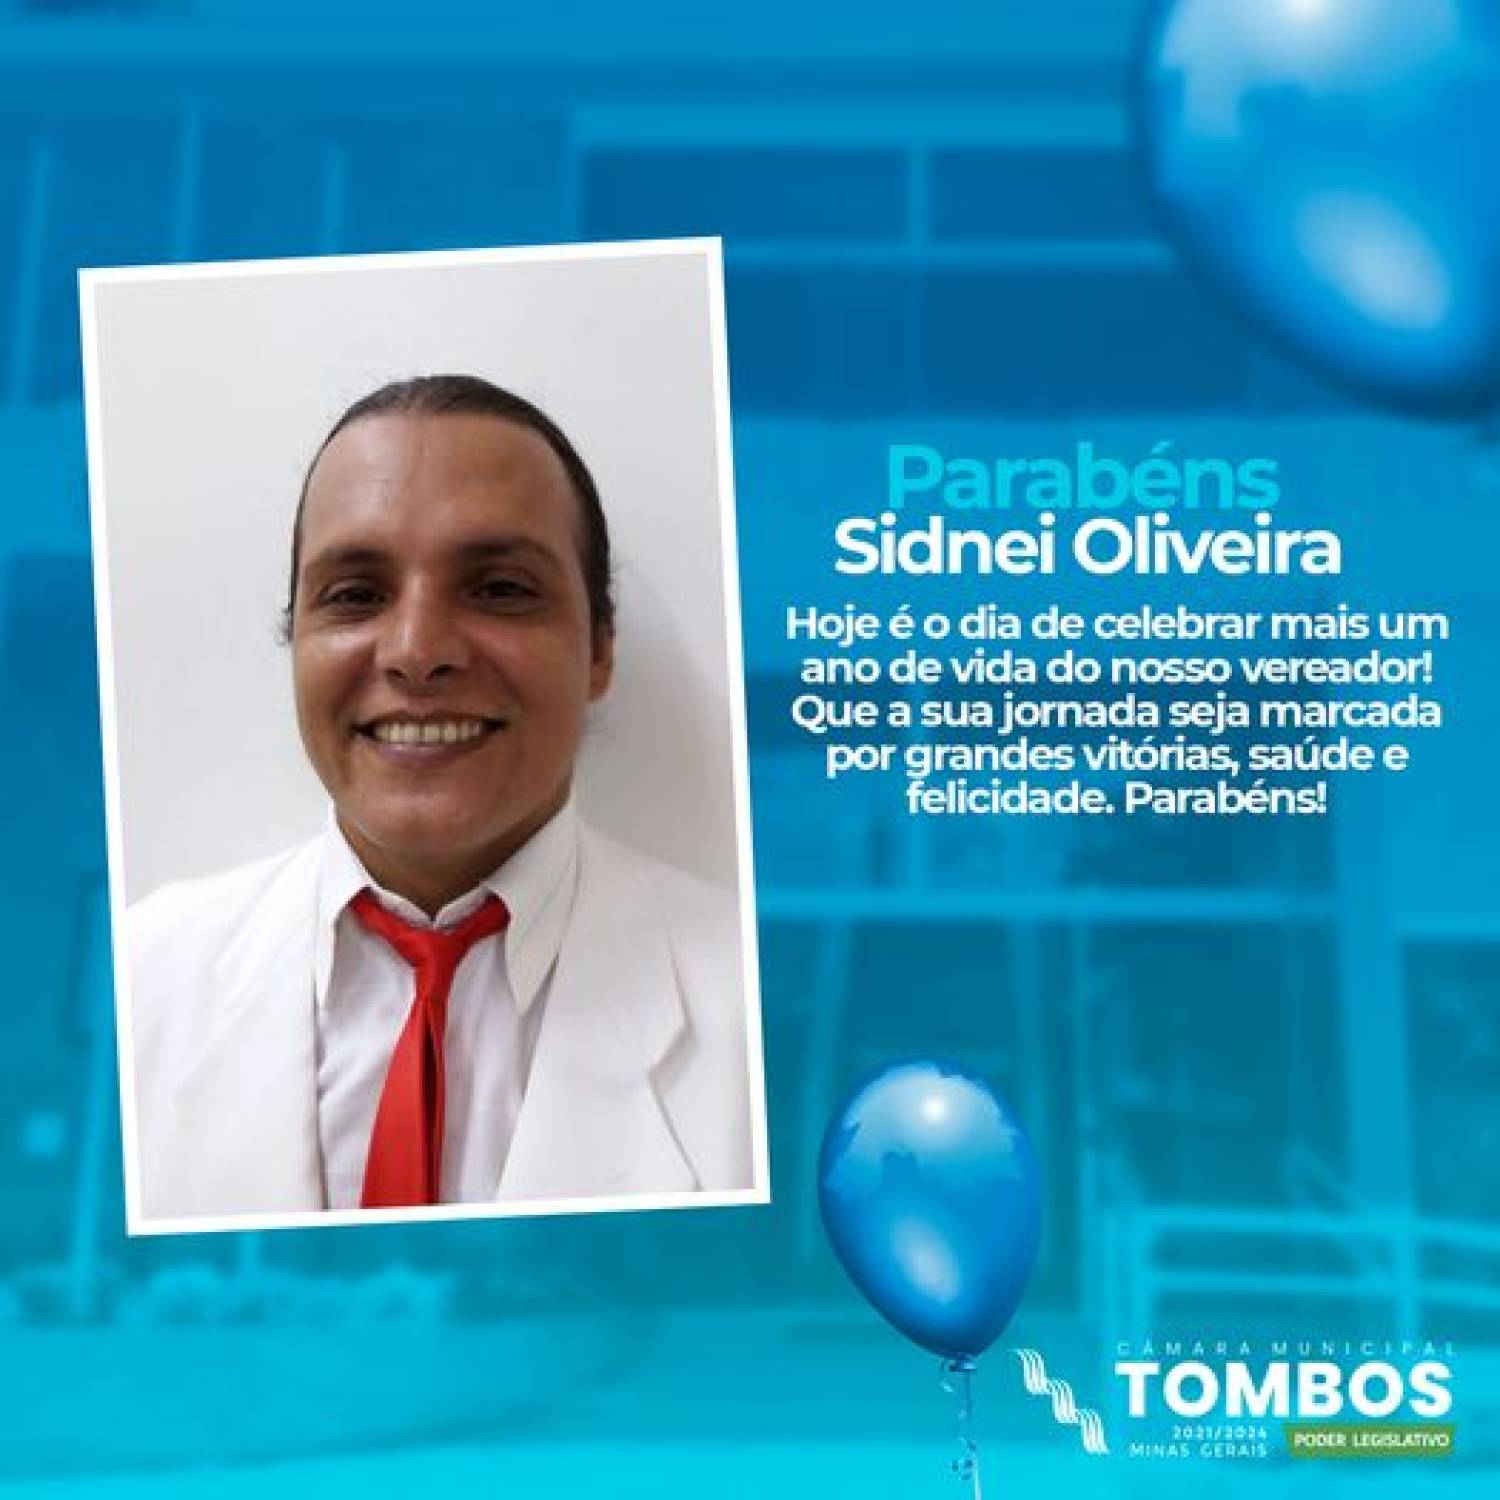 Parabéns Sidnei Oliveira!